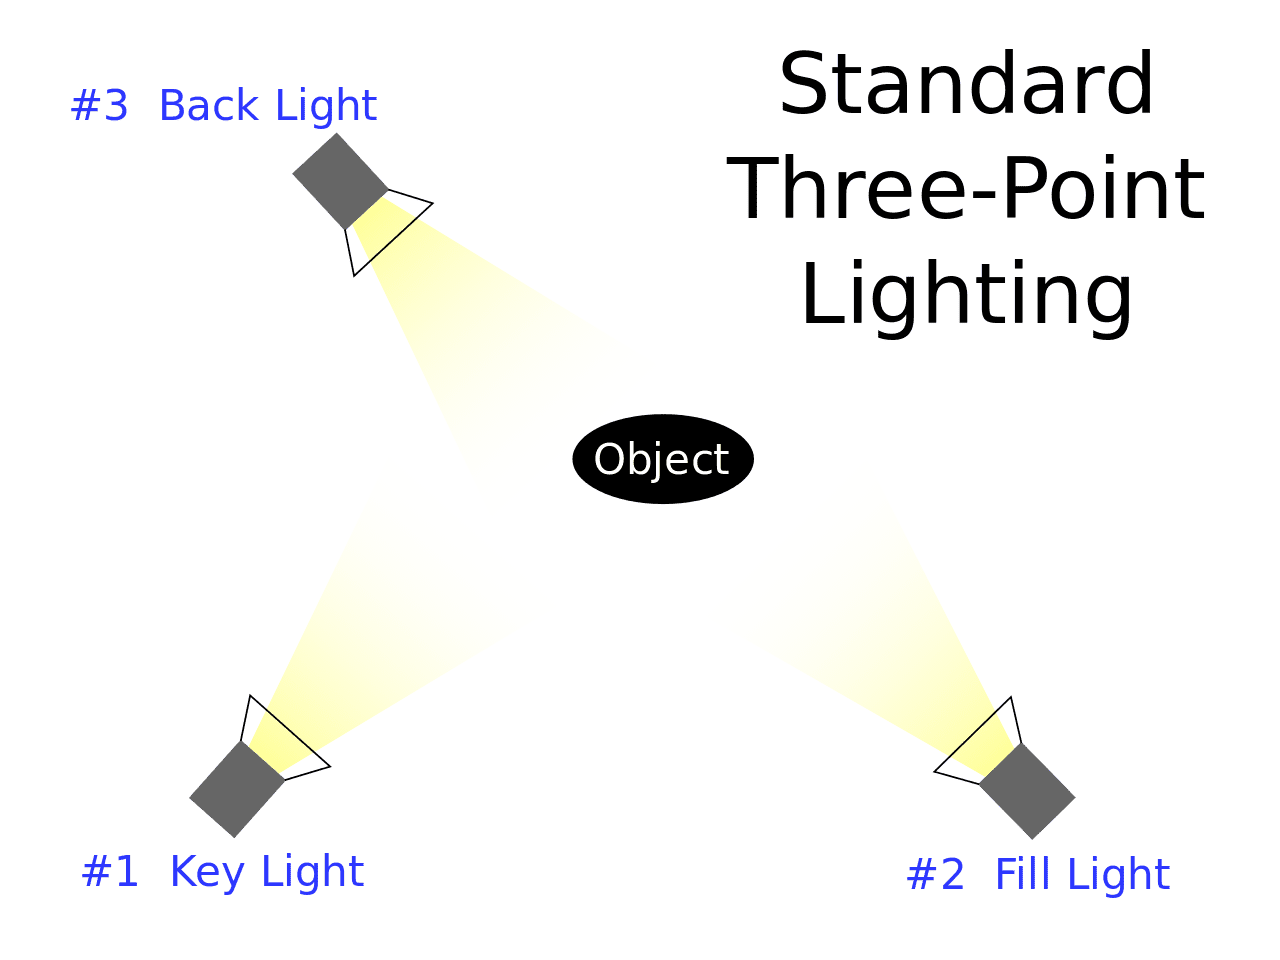 Standard three-point lightning explained